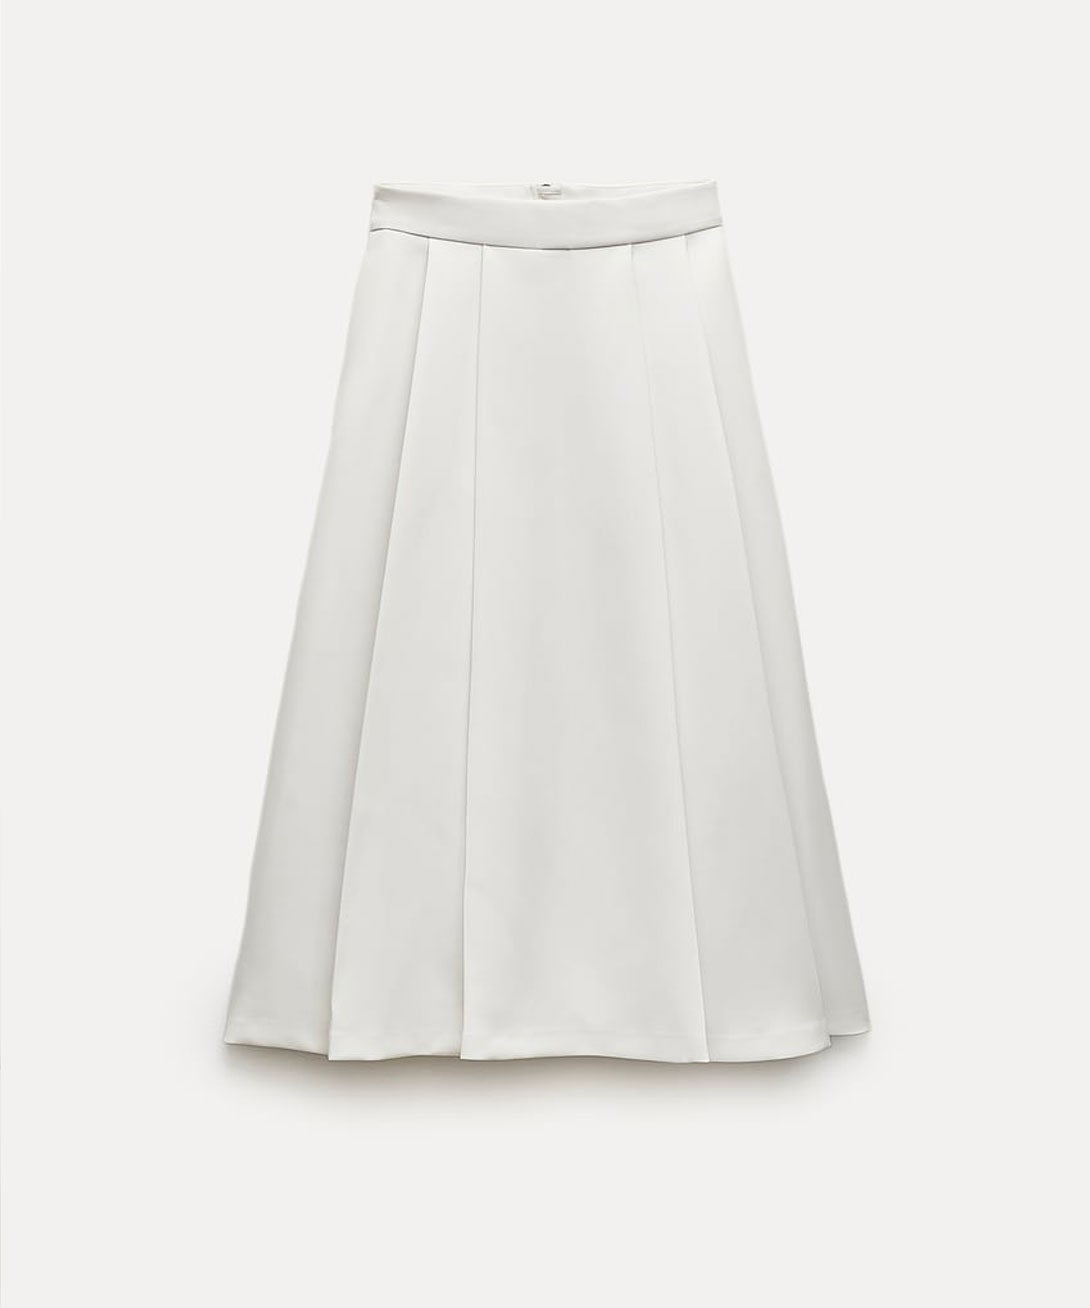 Zara + ZW Collection Box Pleat Layered Skirt